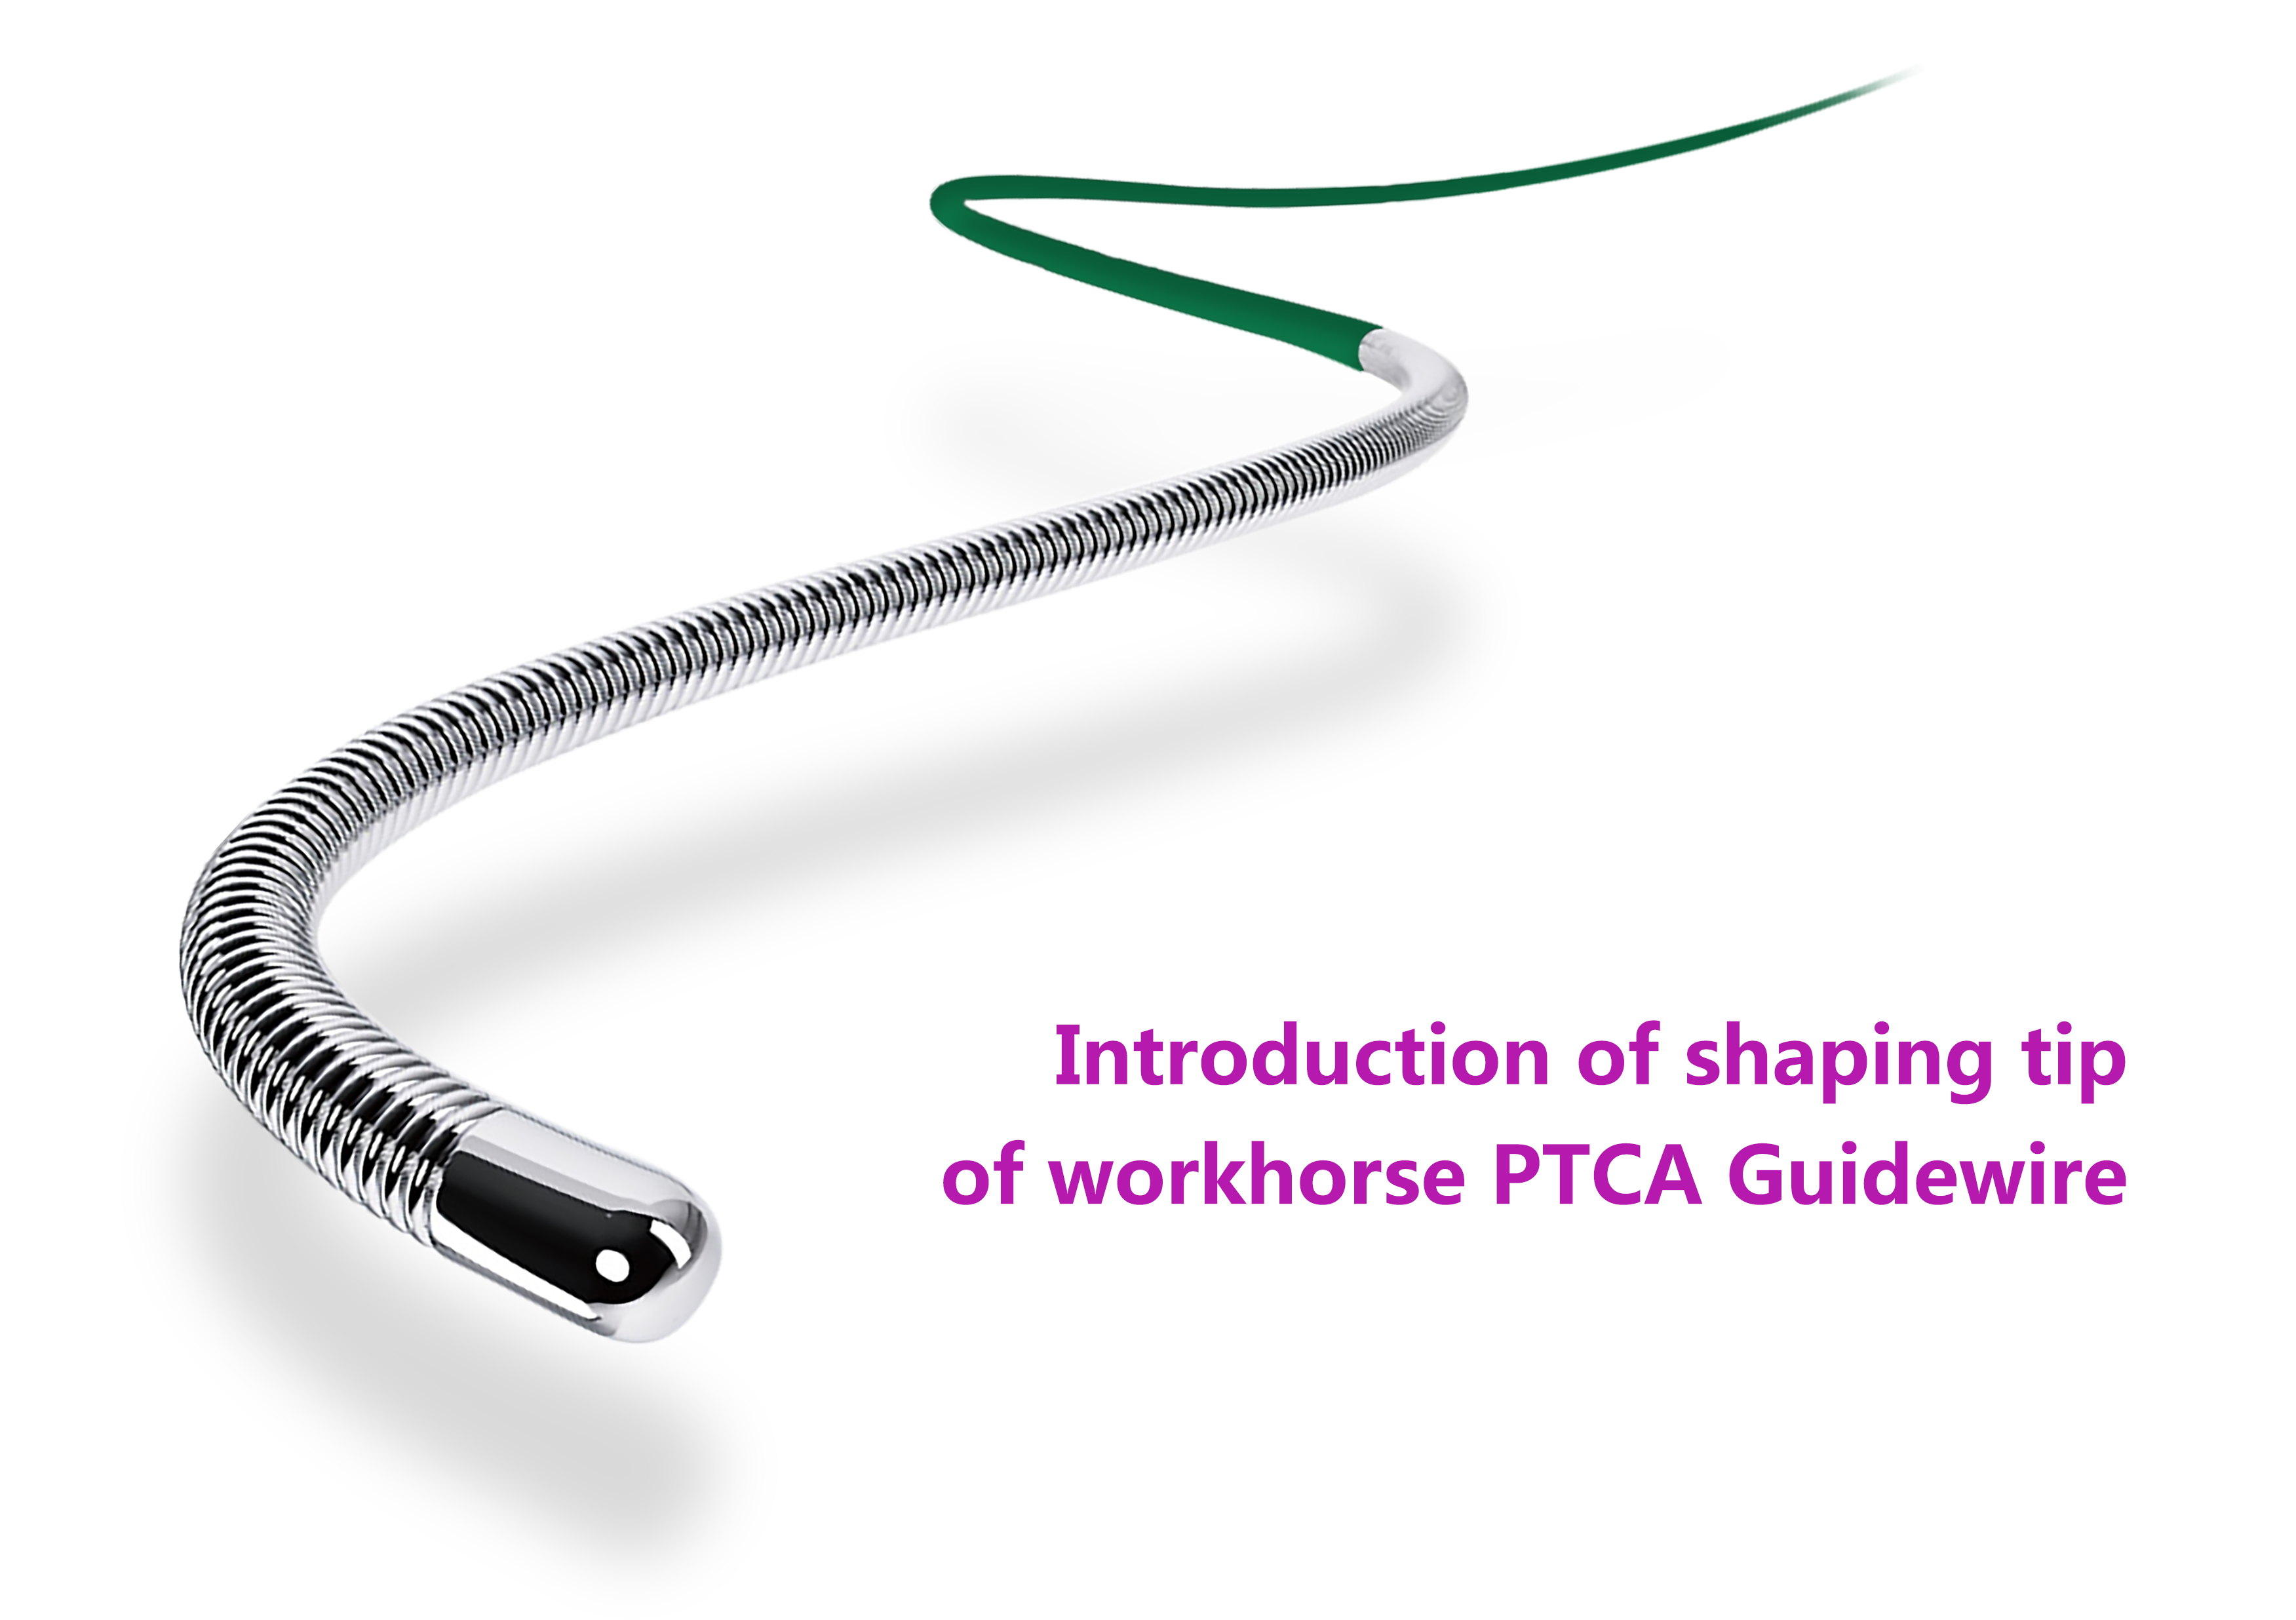 PTCA guide wire(workhorse)